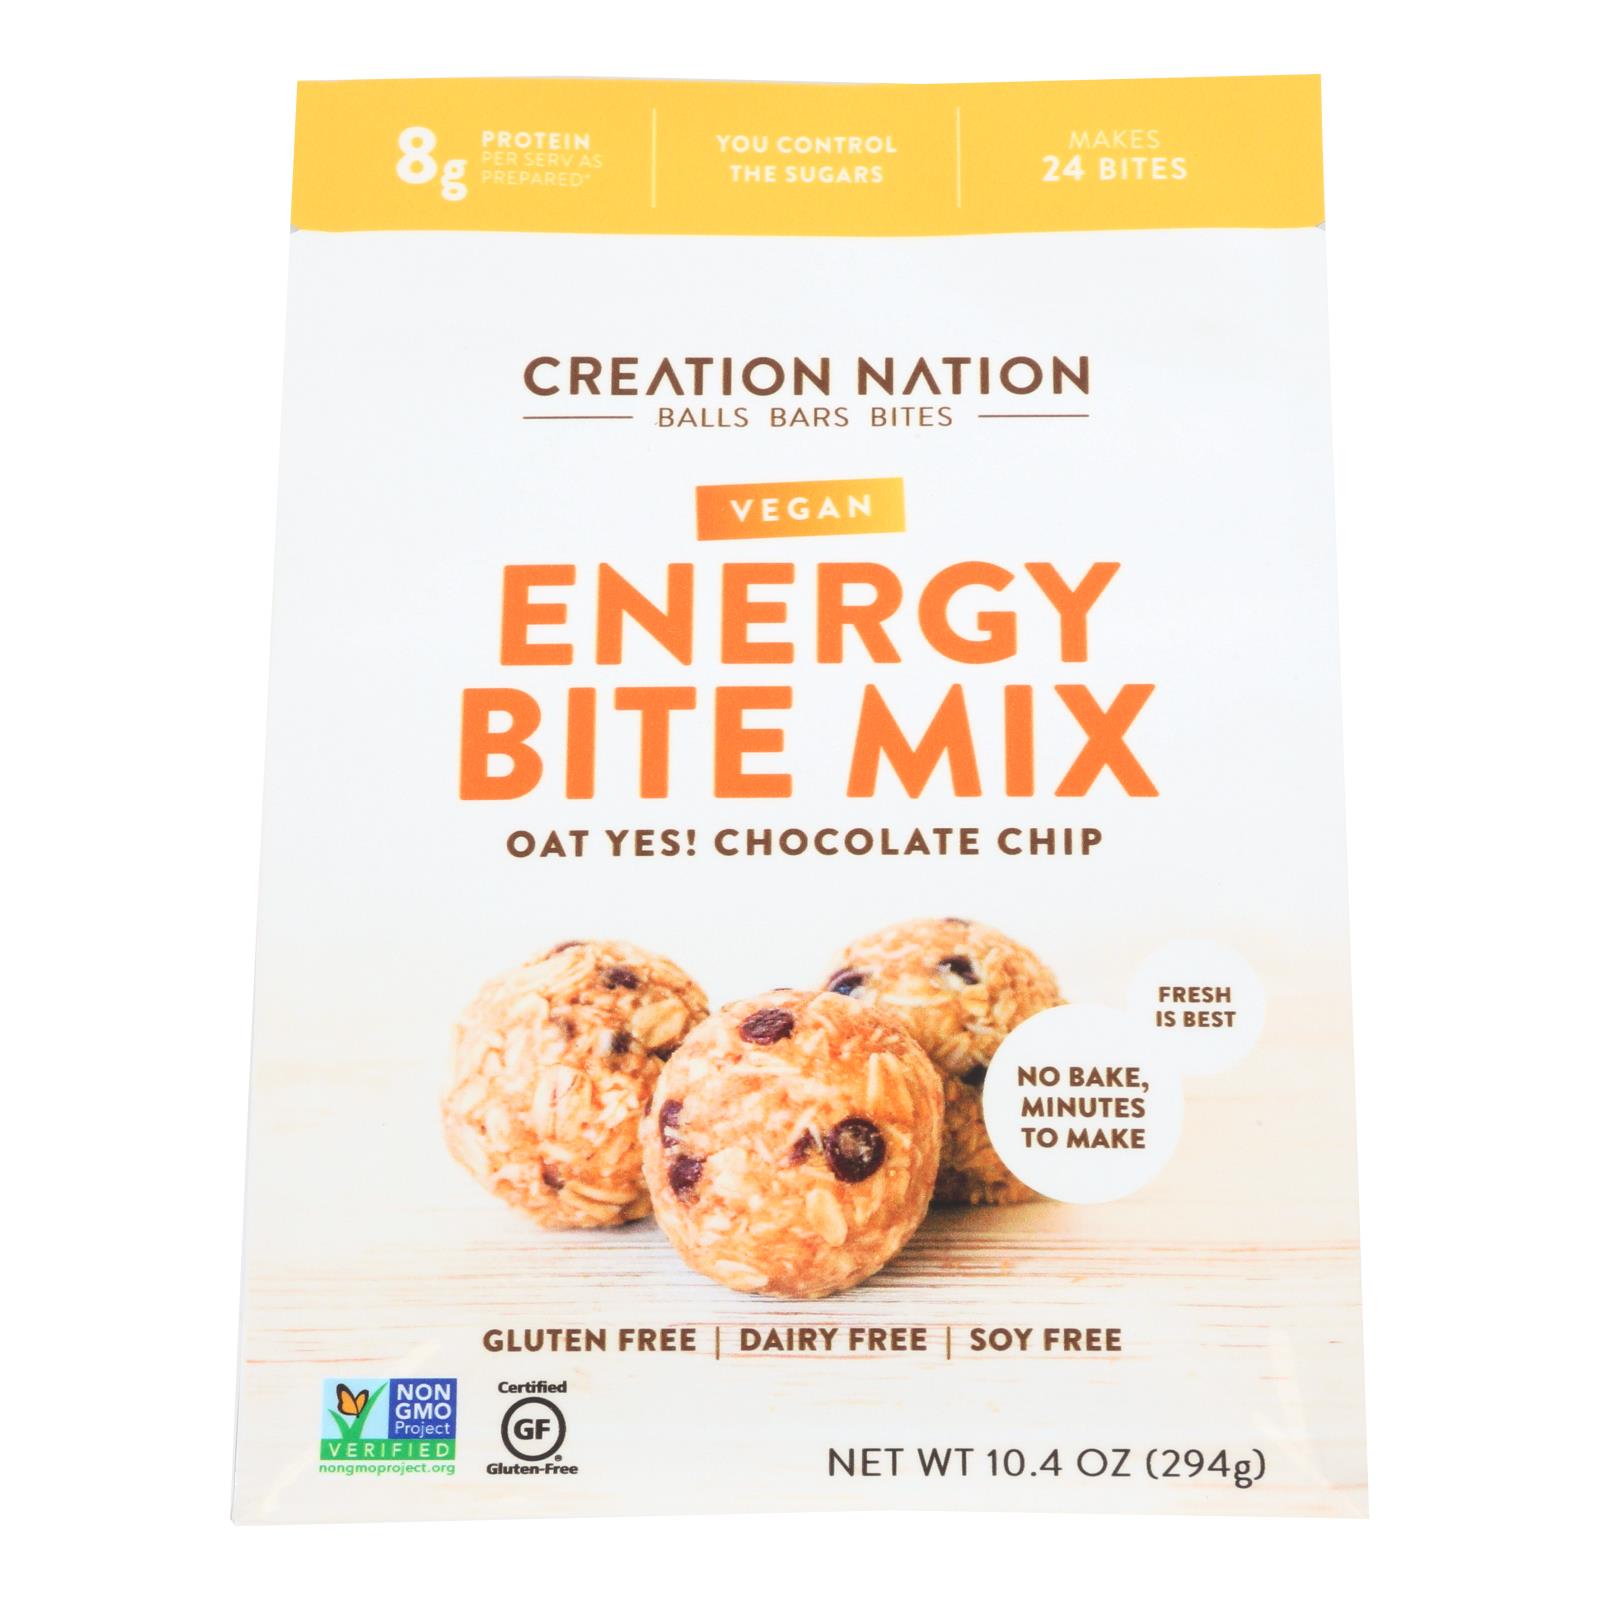 Creation Nation Oat Yes! Chocolate Chip Vegan Energy Bite Mix - 6개 묶음상품 - 10.4 OZ